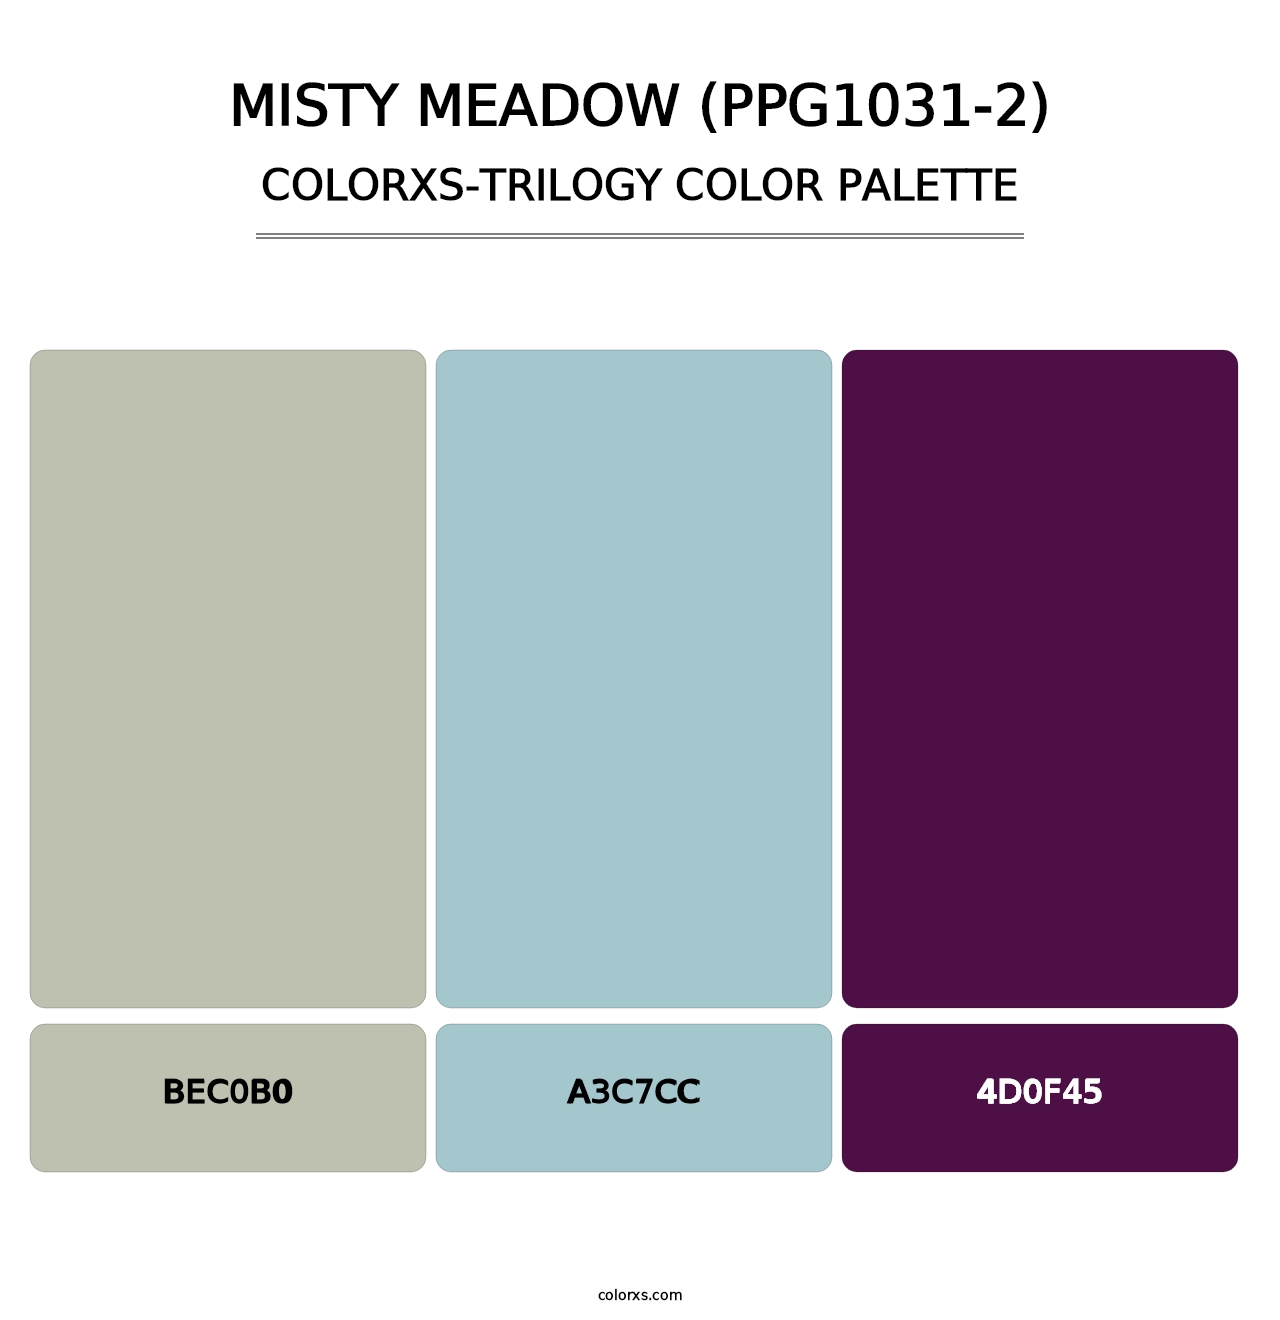 Misty Meadow (PPG1031-2) - Colorxs Trilogy Palette